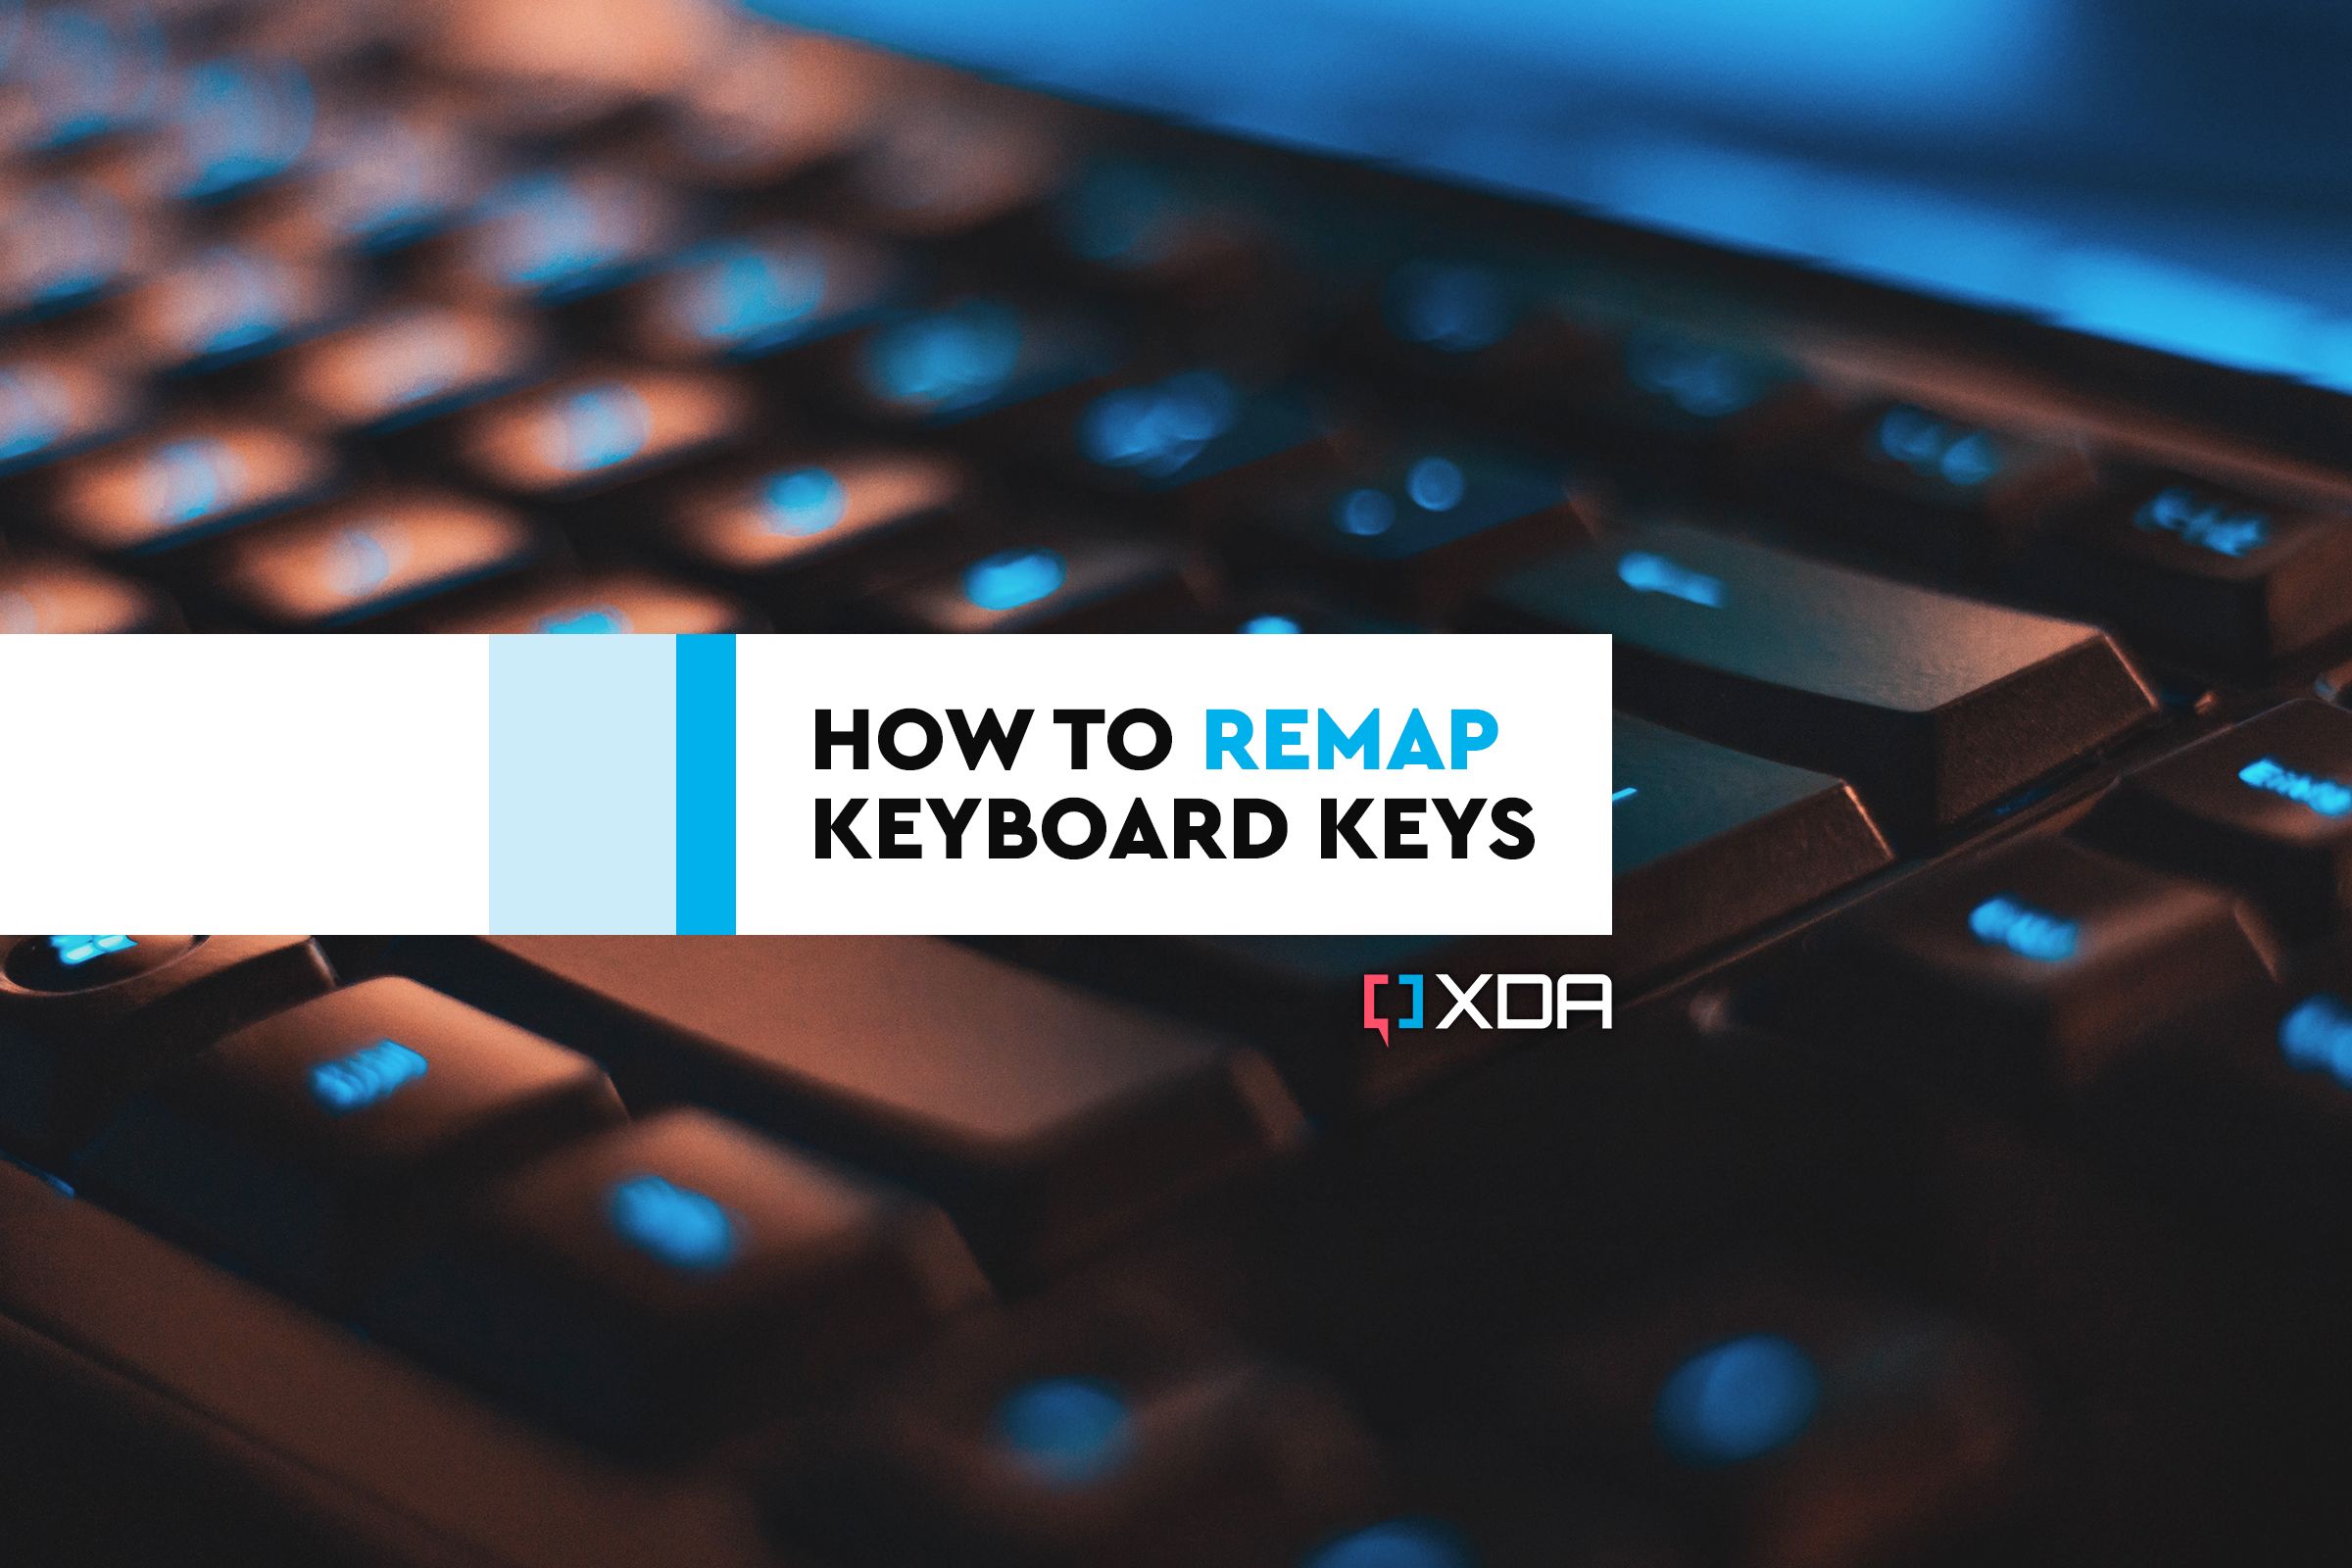 How to remap keyboard keys on Windows